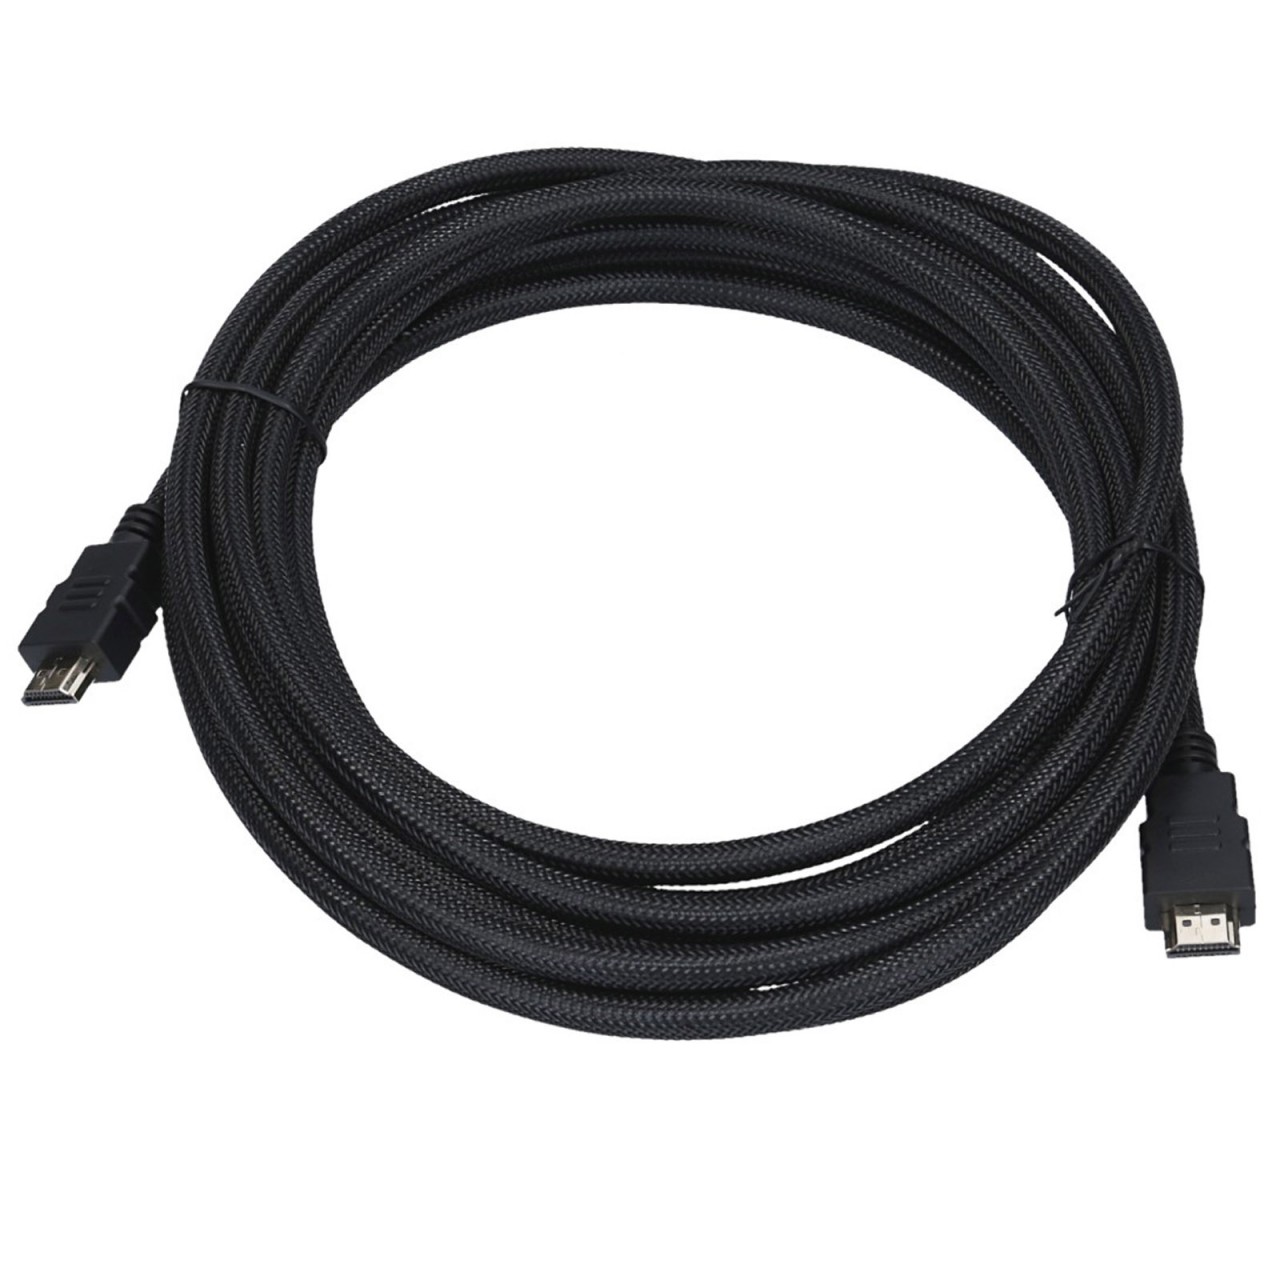 10m ENOVA HDMI Kabel 4K mit Kupferkabeltechnik - Langes HDMI Kabel mit Goldkontakten und Nylongeflecht Design Mantel